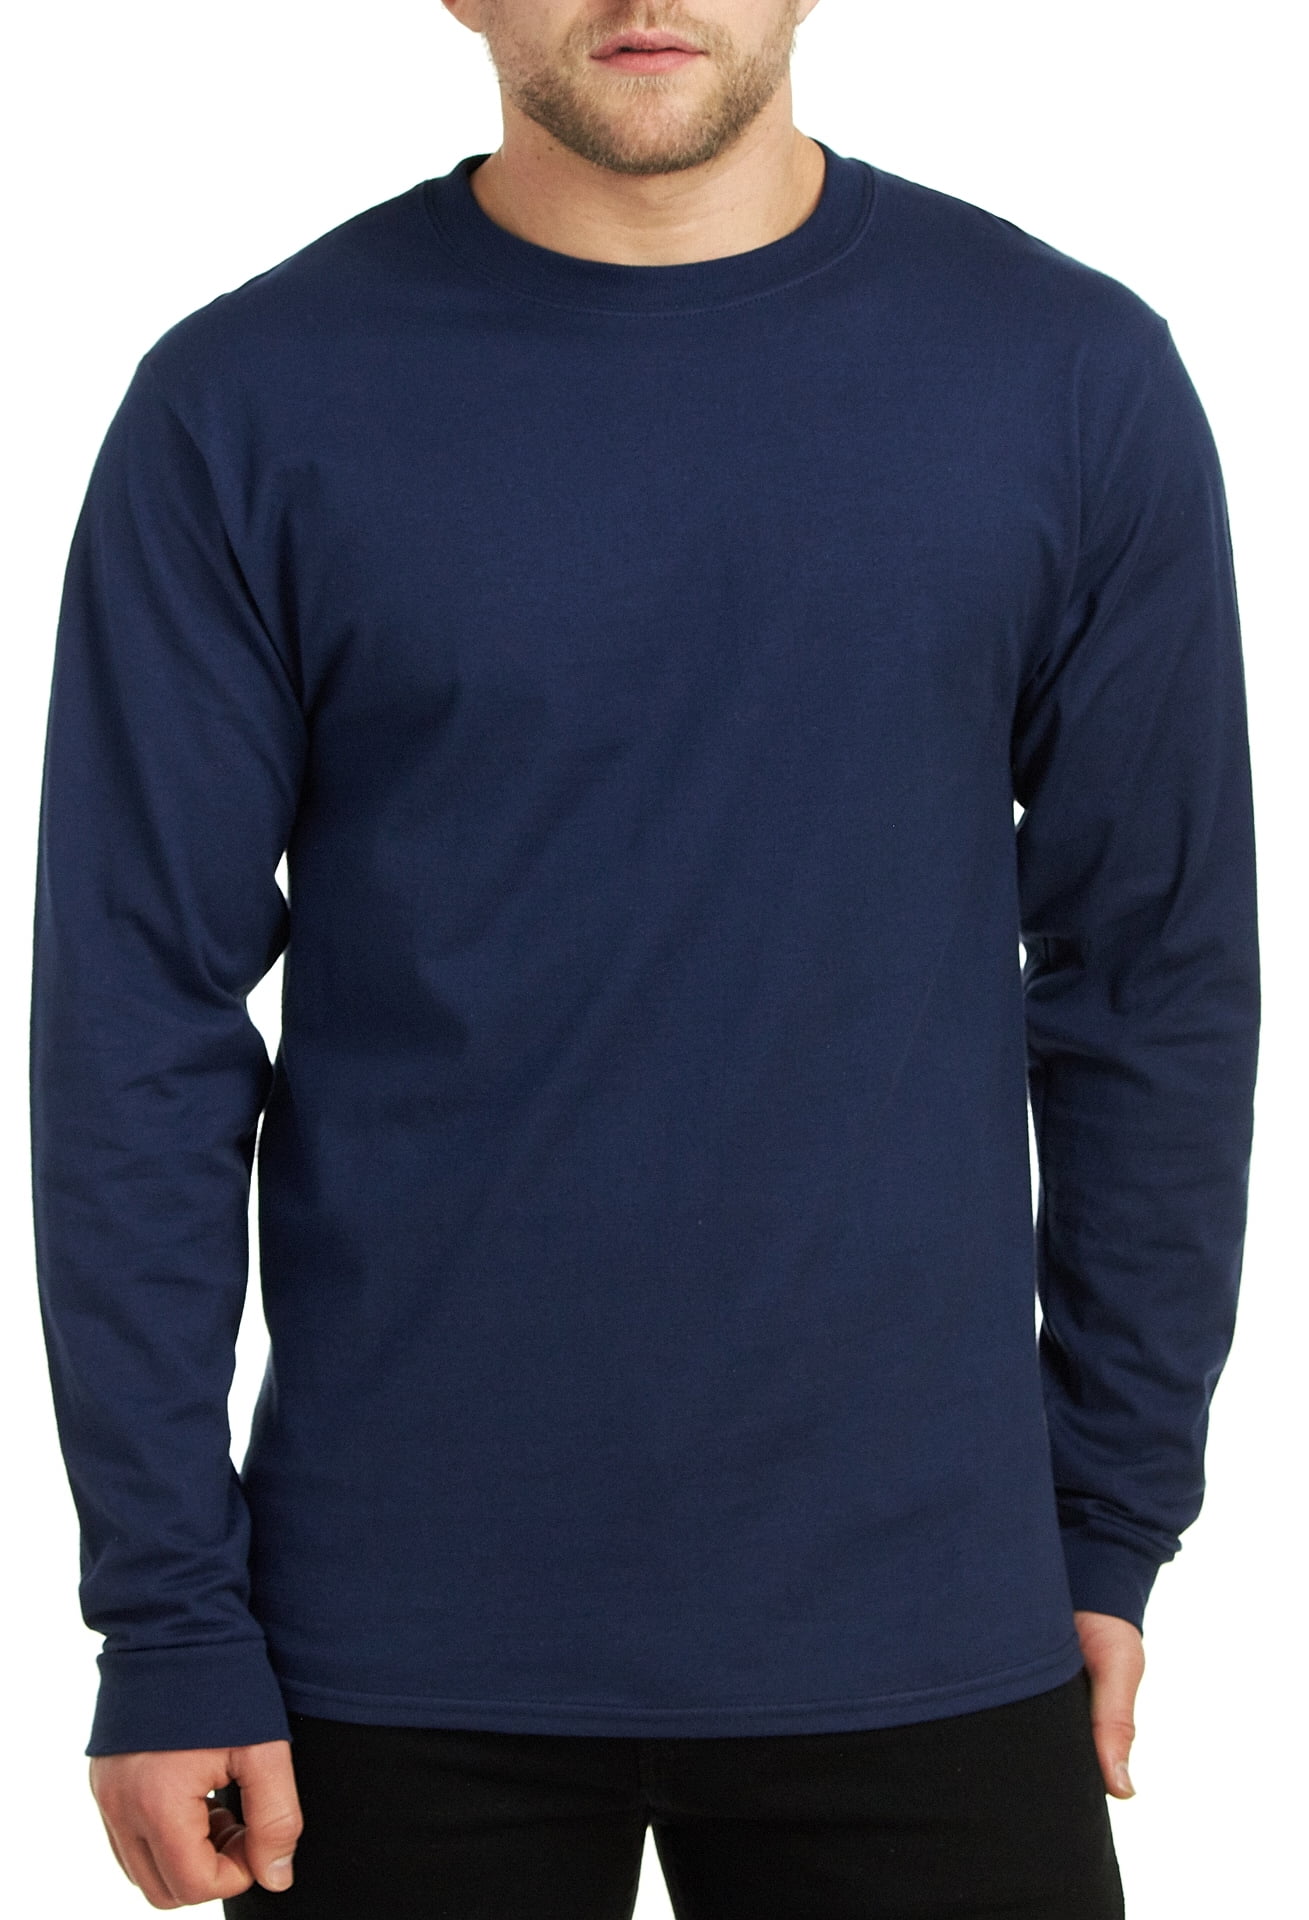 Hanes - Hanes Long Sleeve Beefy-T T-Shirts, Navy, Large - Walmart.com ...